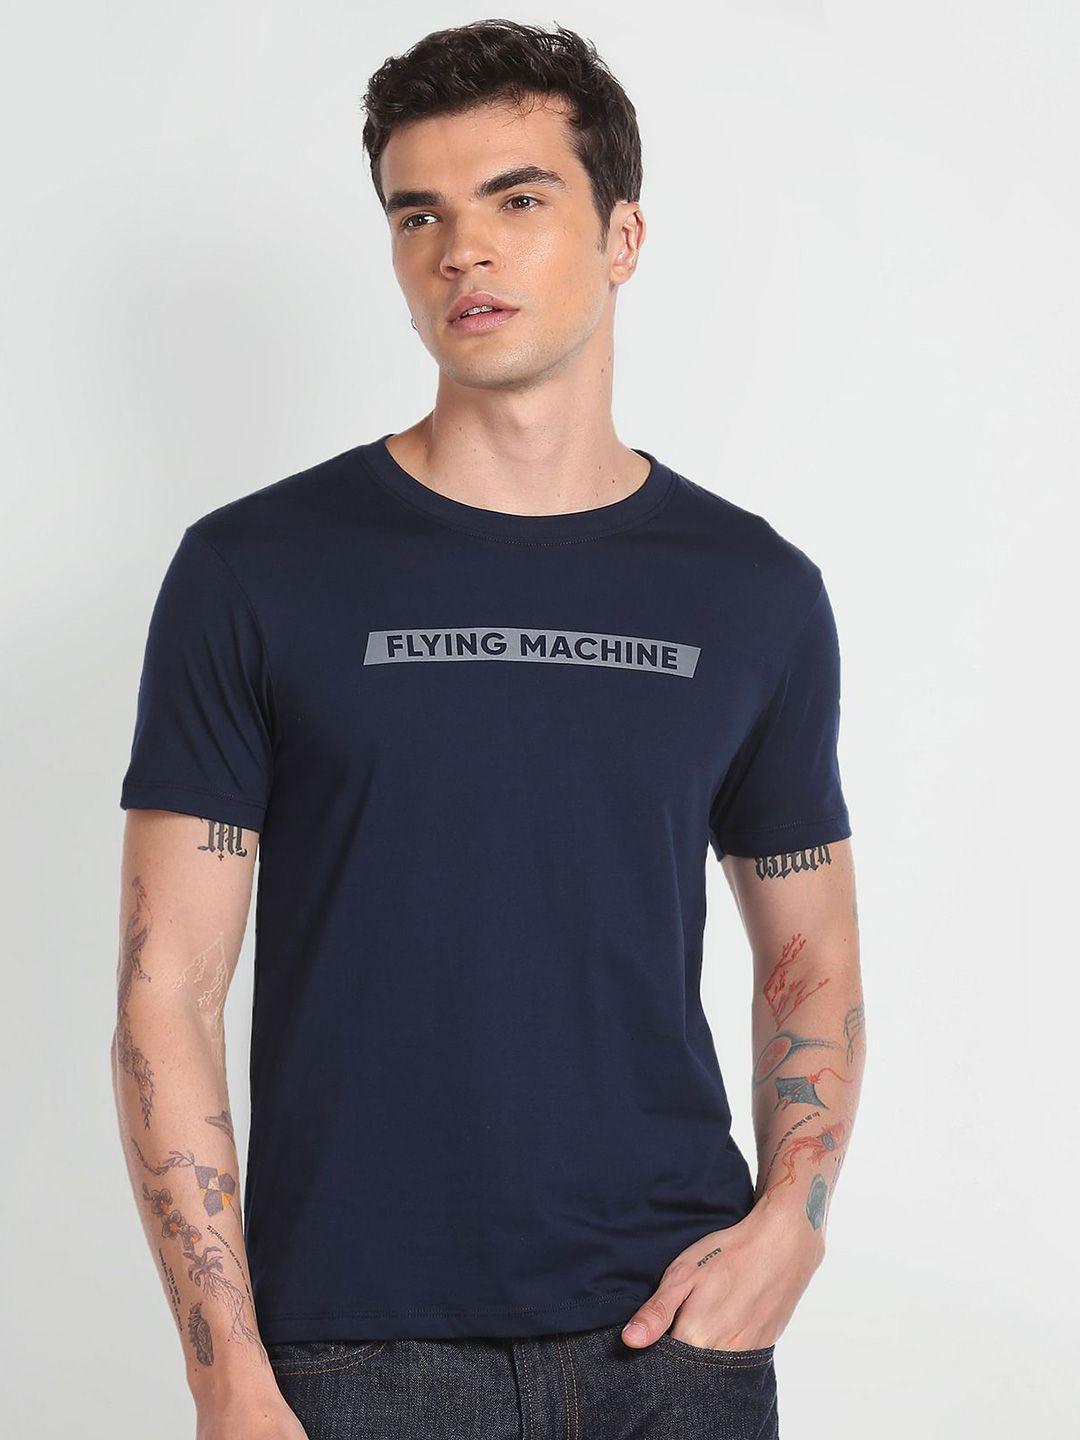 flying-machine-typography-printed-short-sleeves-slim-fit-t-shirt